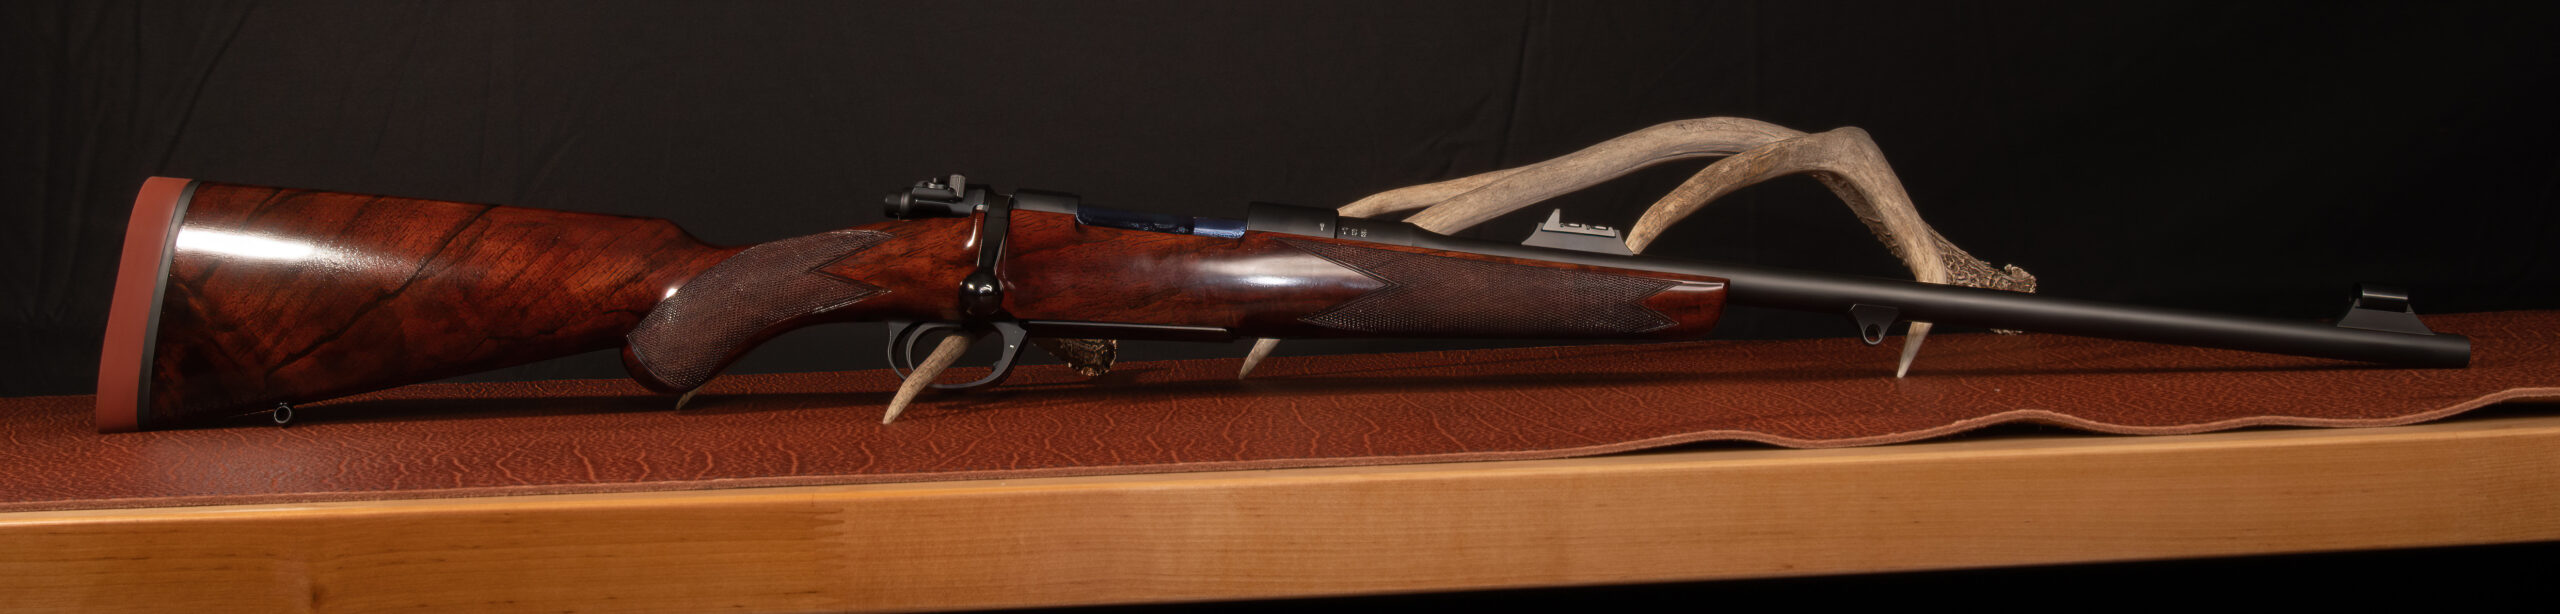 Rigby Highland Stalker Luxury Arms Mauser